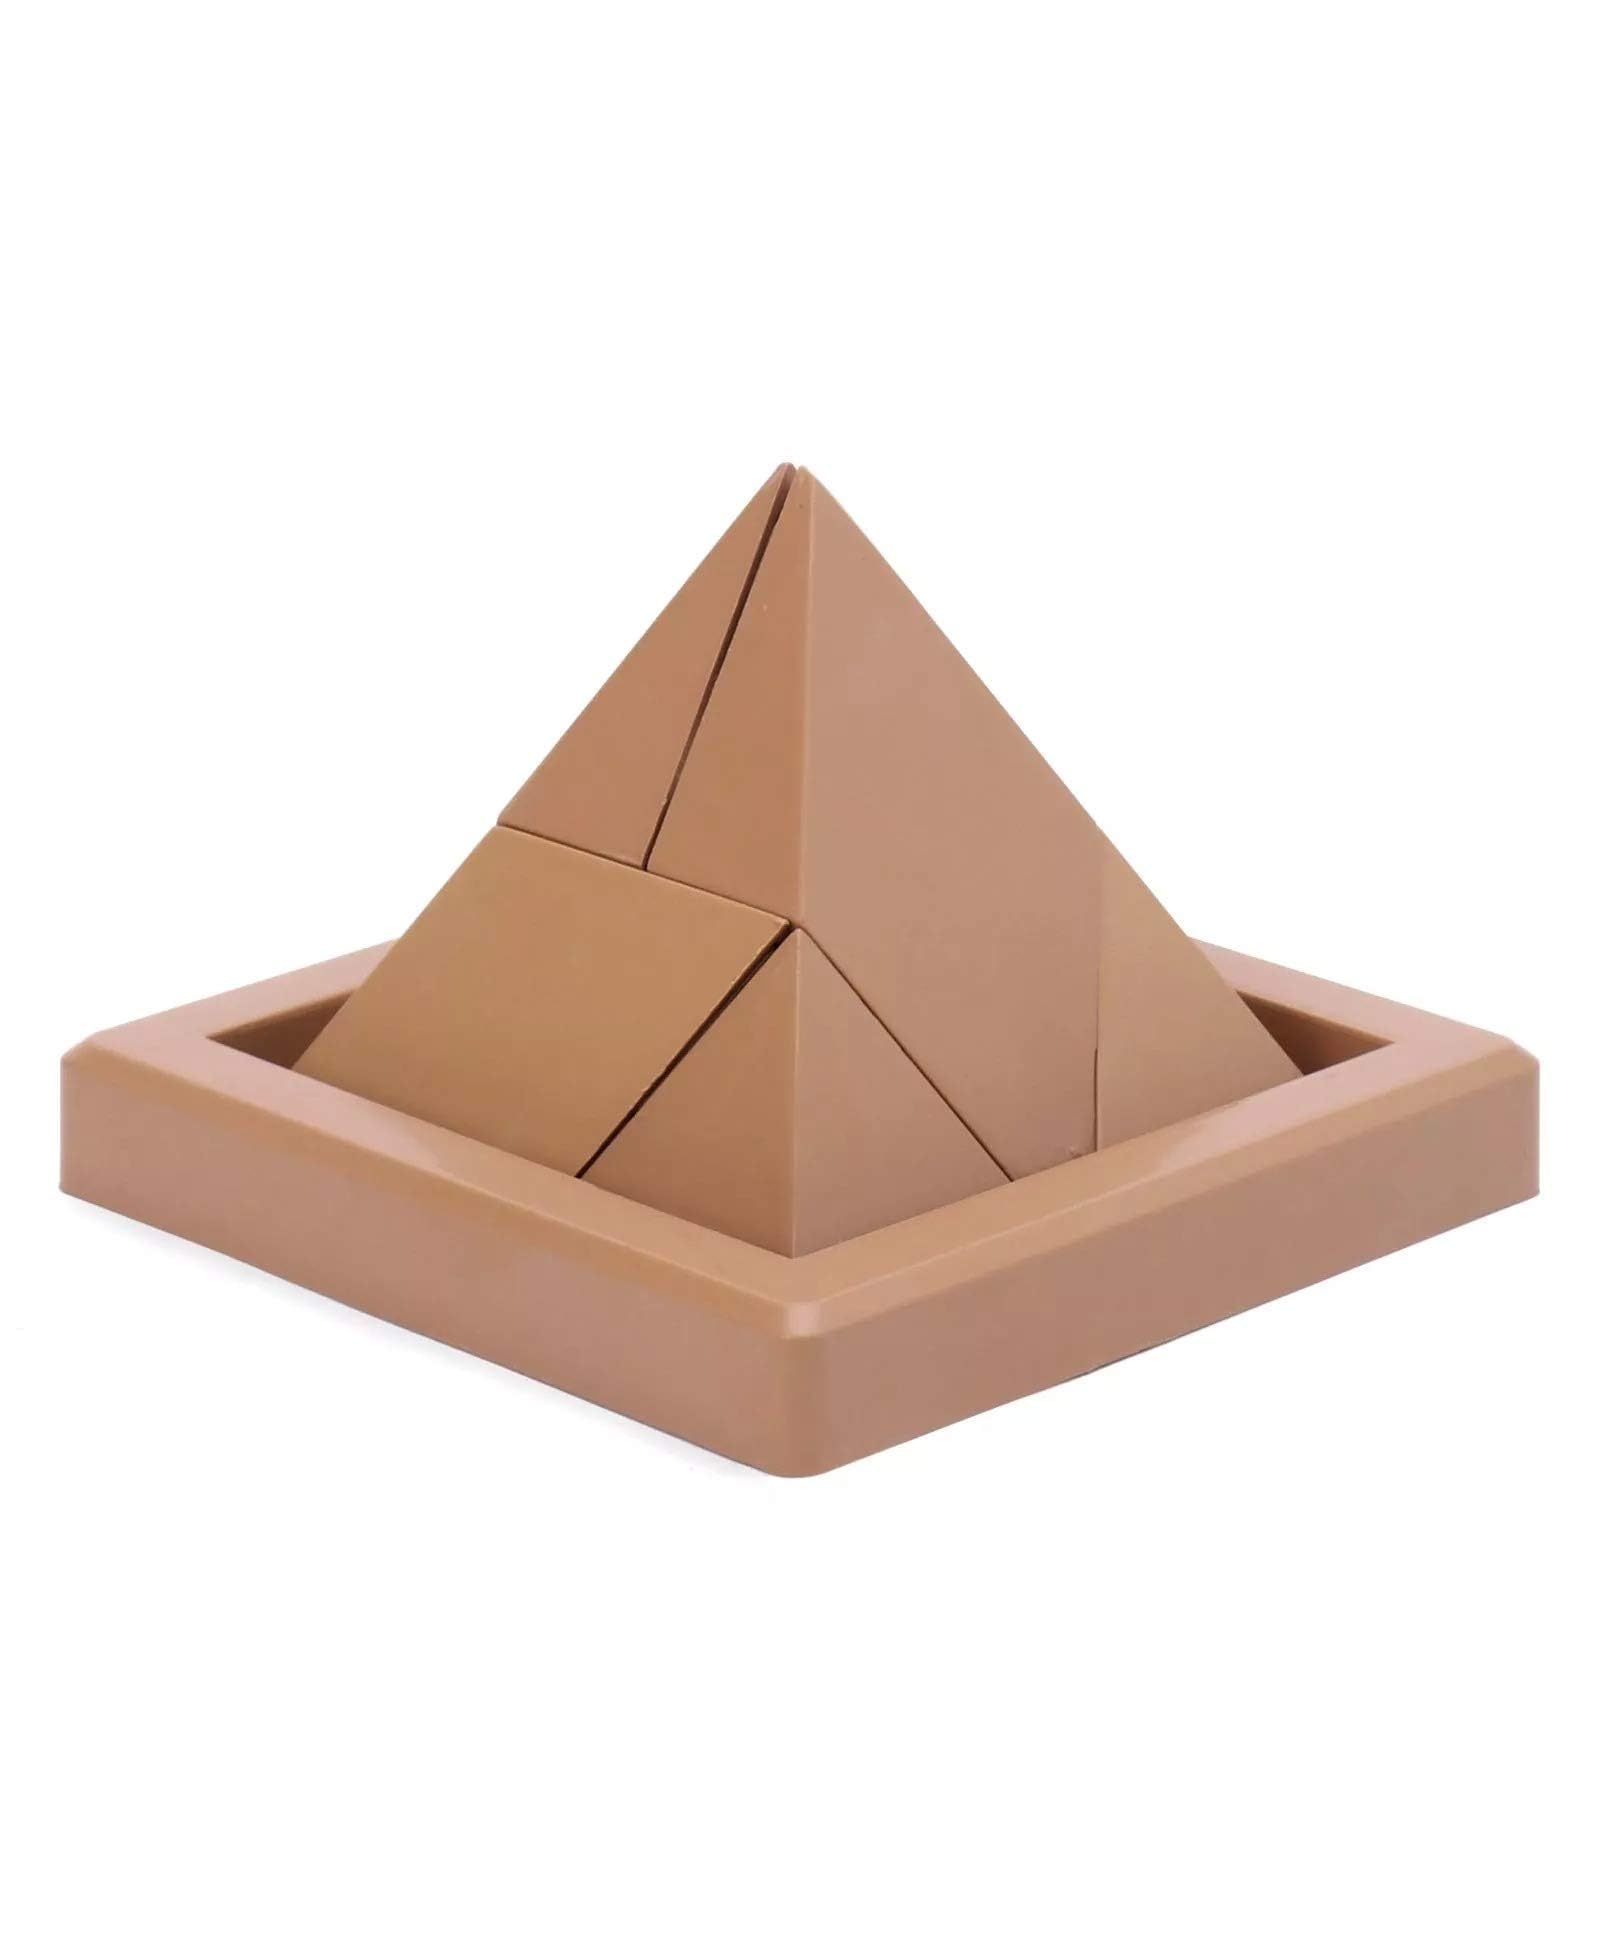 RATNA'S Pyramid Puzzle, Multicolour